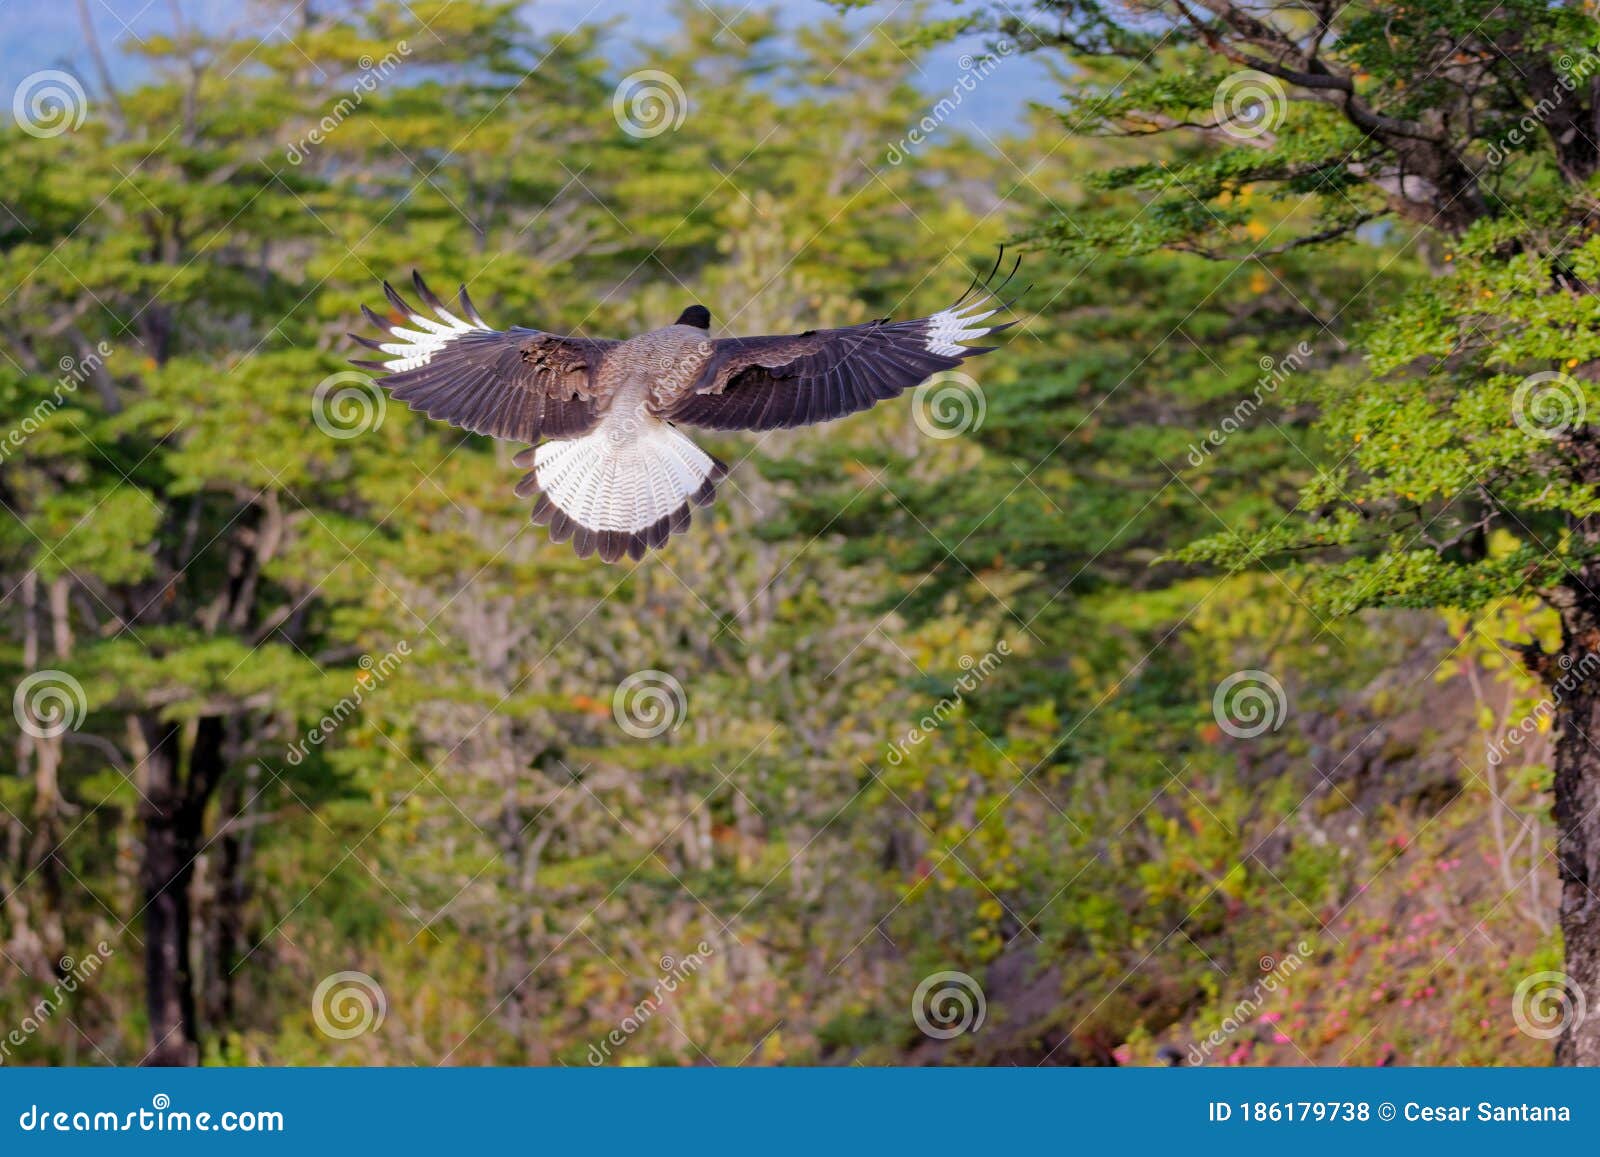 scavenger bird flying, known as caracara